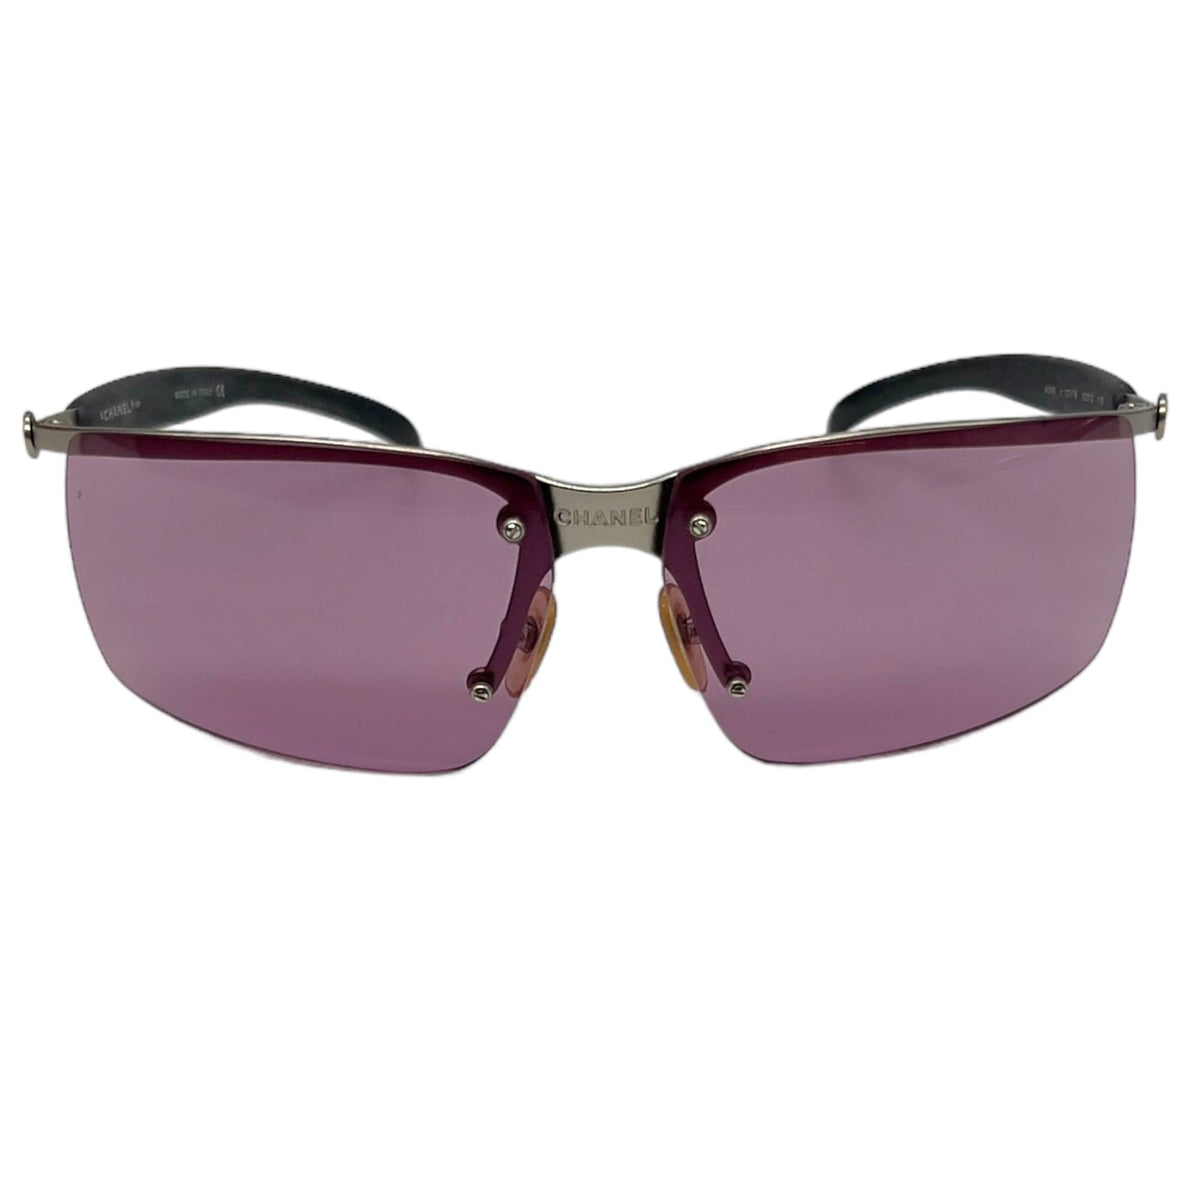 CHANEL Vintage 1990s #4009 Rimless Sunglasses - Purple